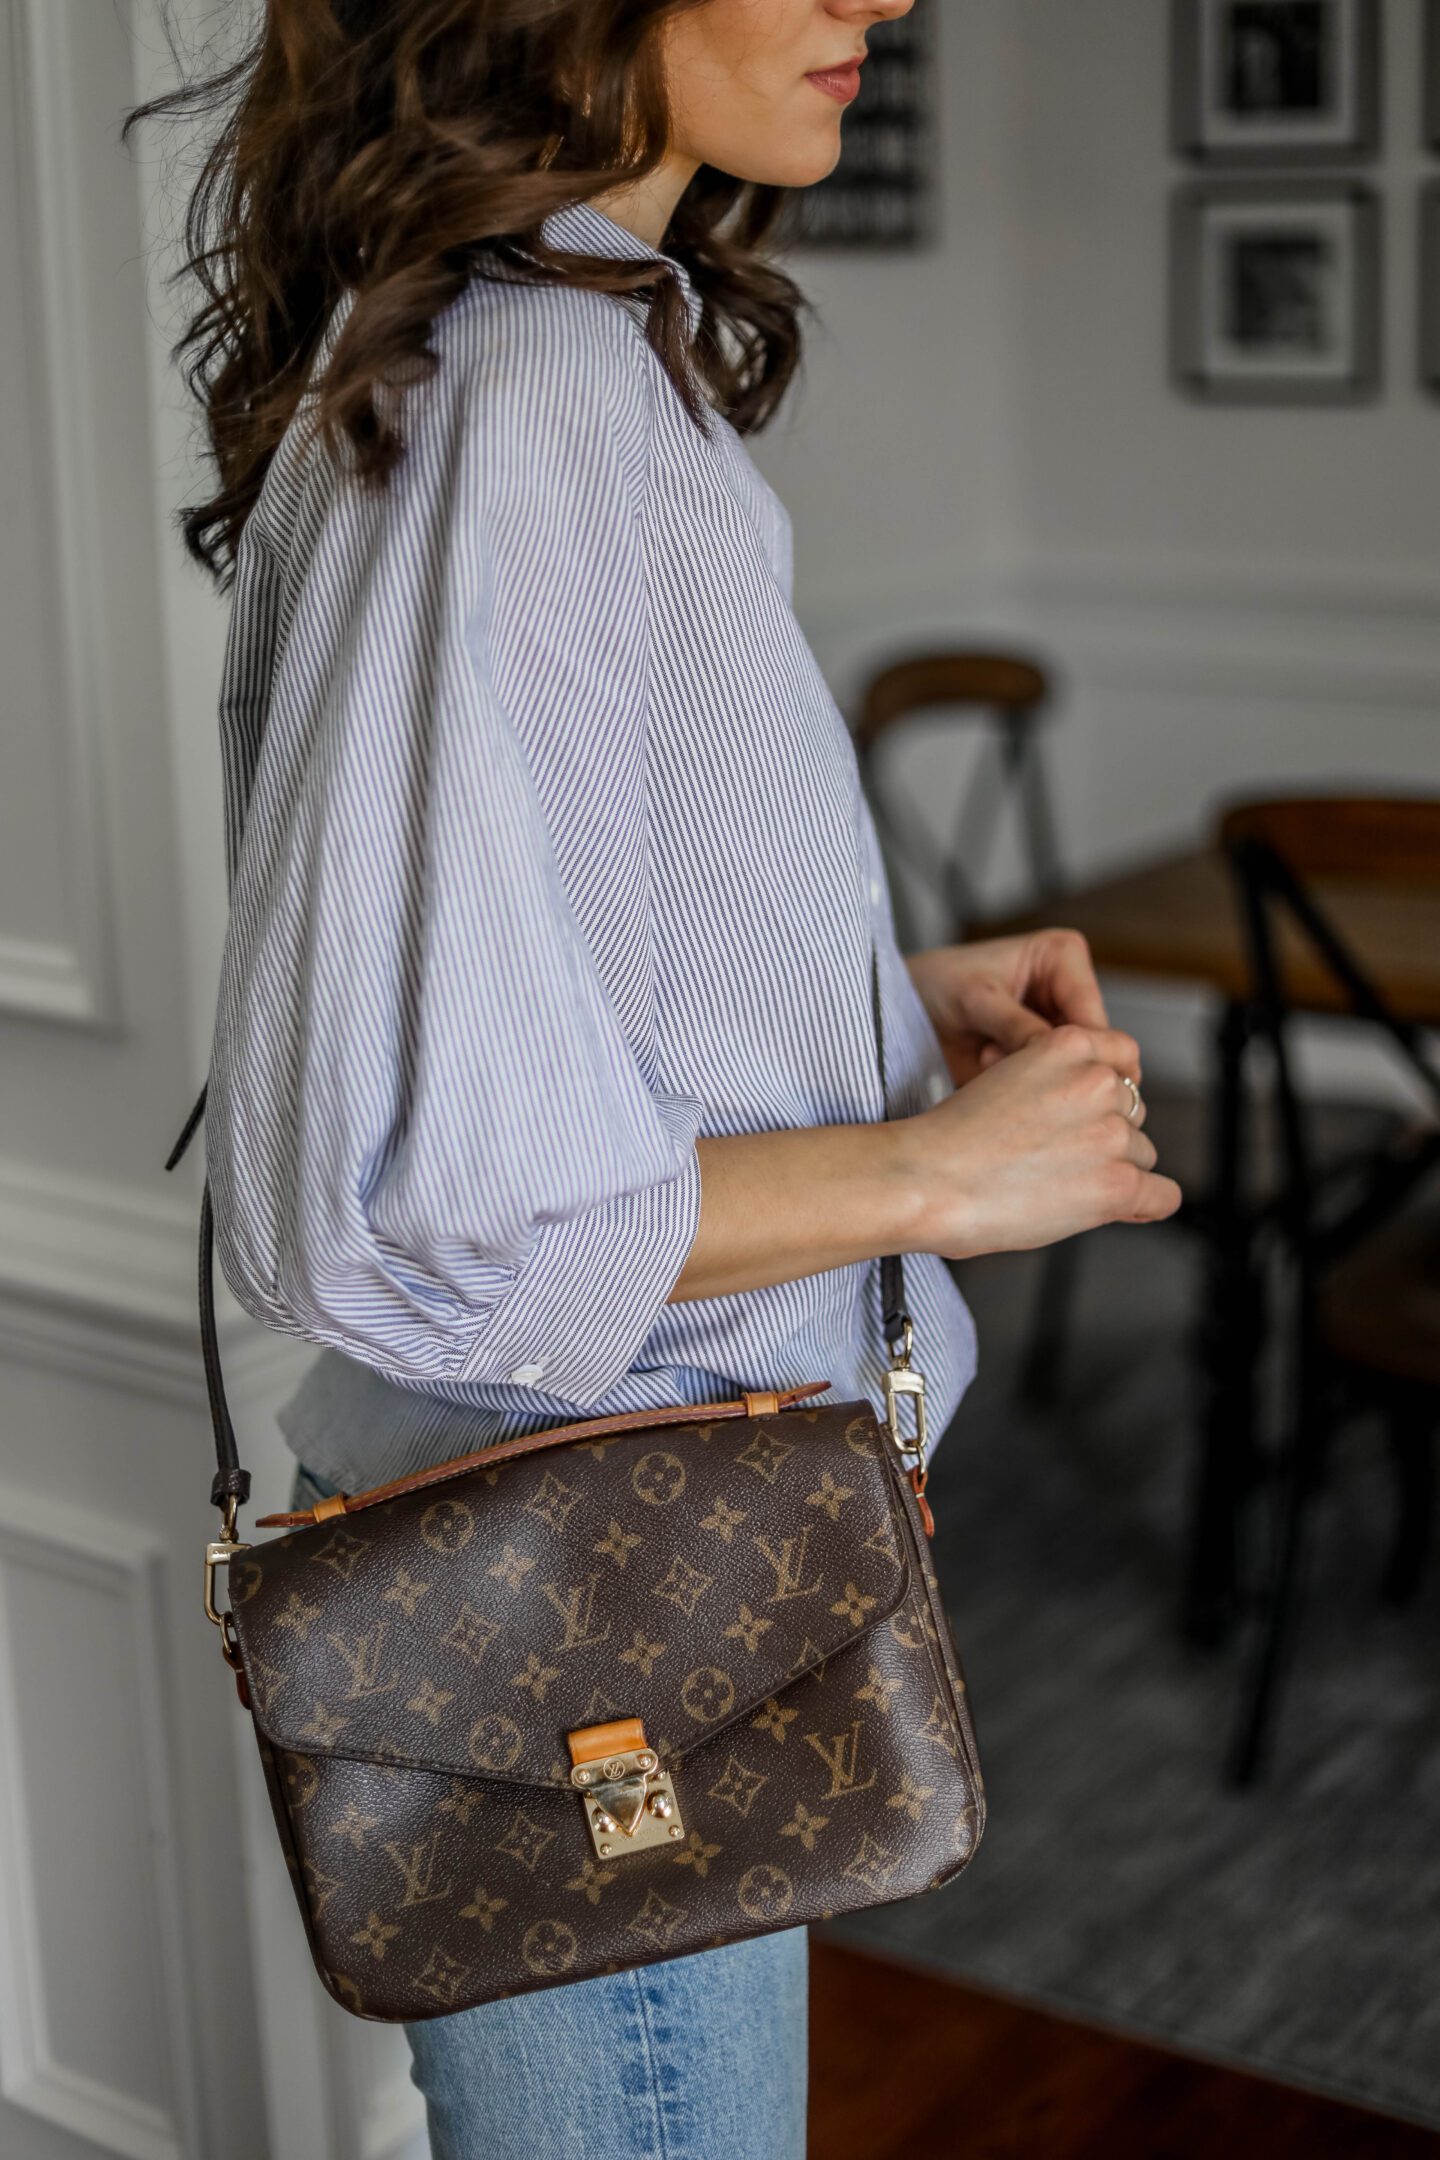 My 3 Favorite Louis Vuitton Bags as a Mom - LOUIS VUITTON POCHETTE METIS